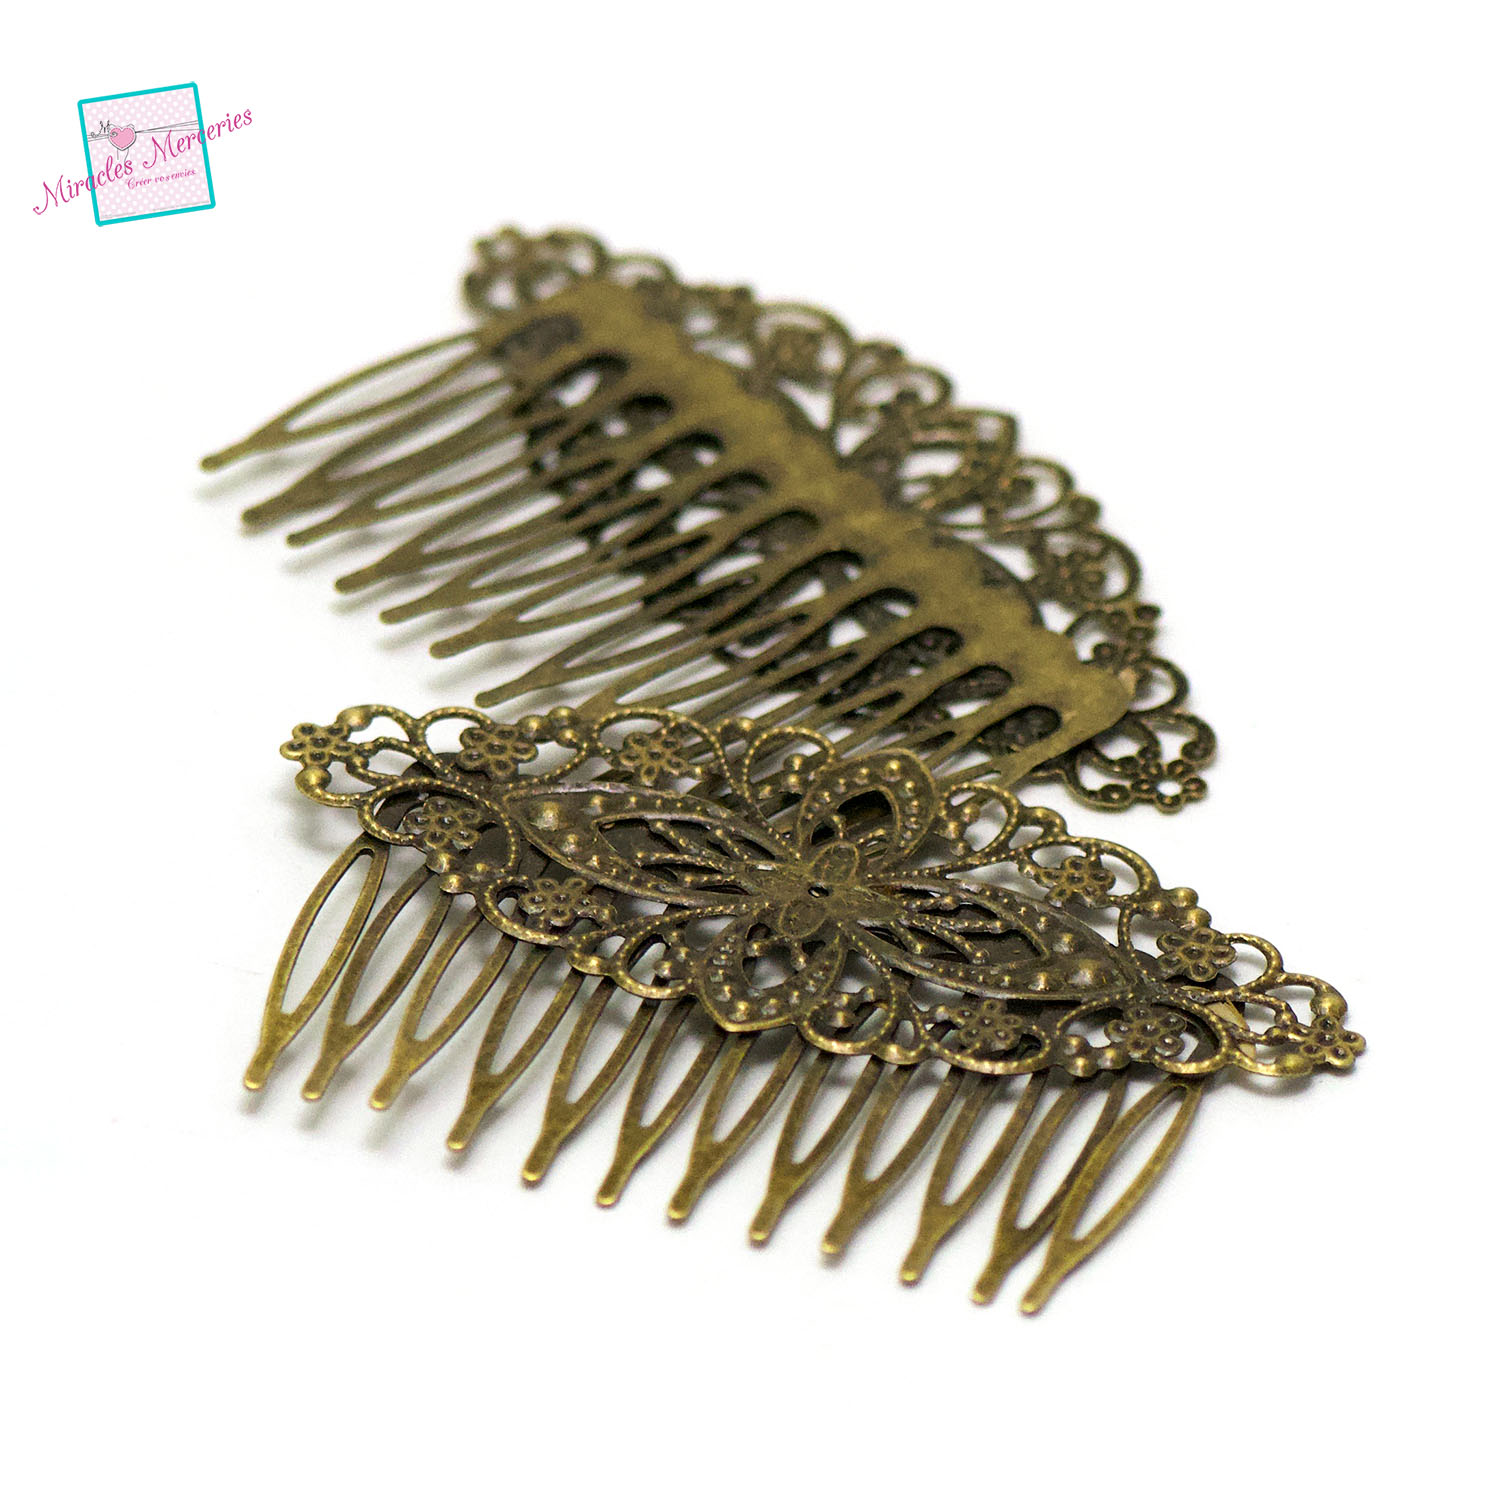 4 barrettes /peignes pour cheveux filigrane, bronze 01